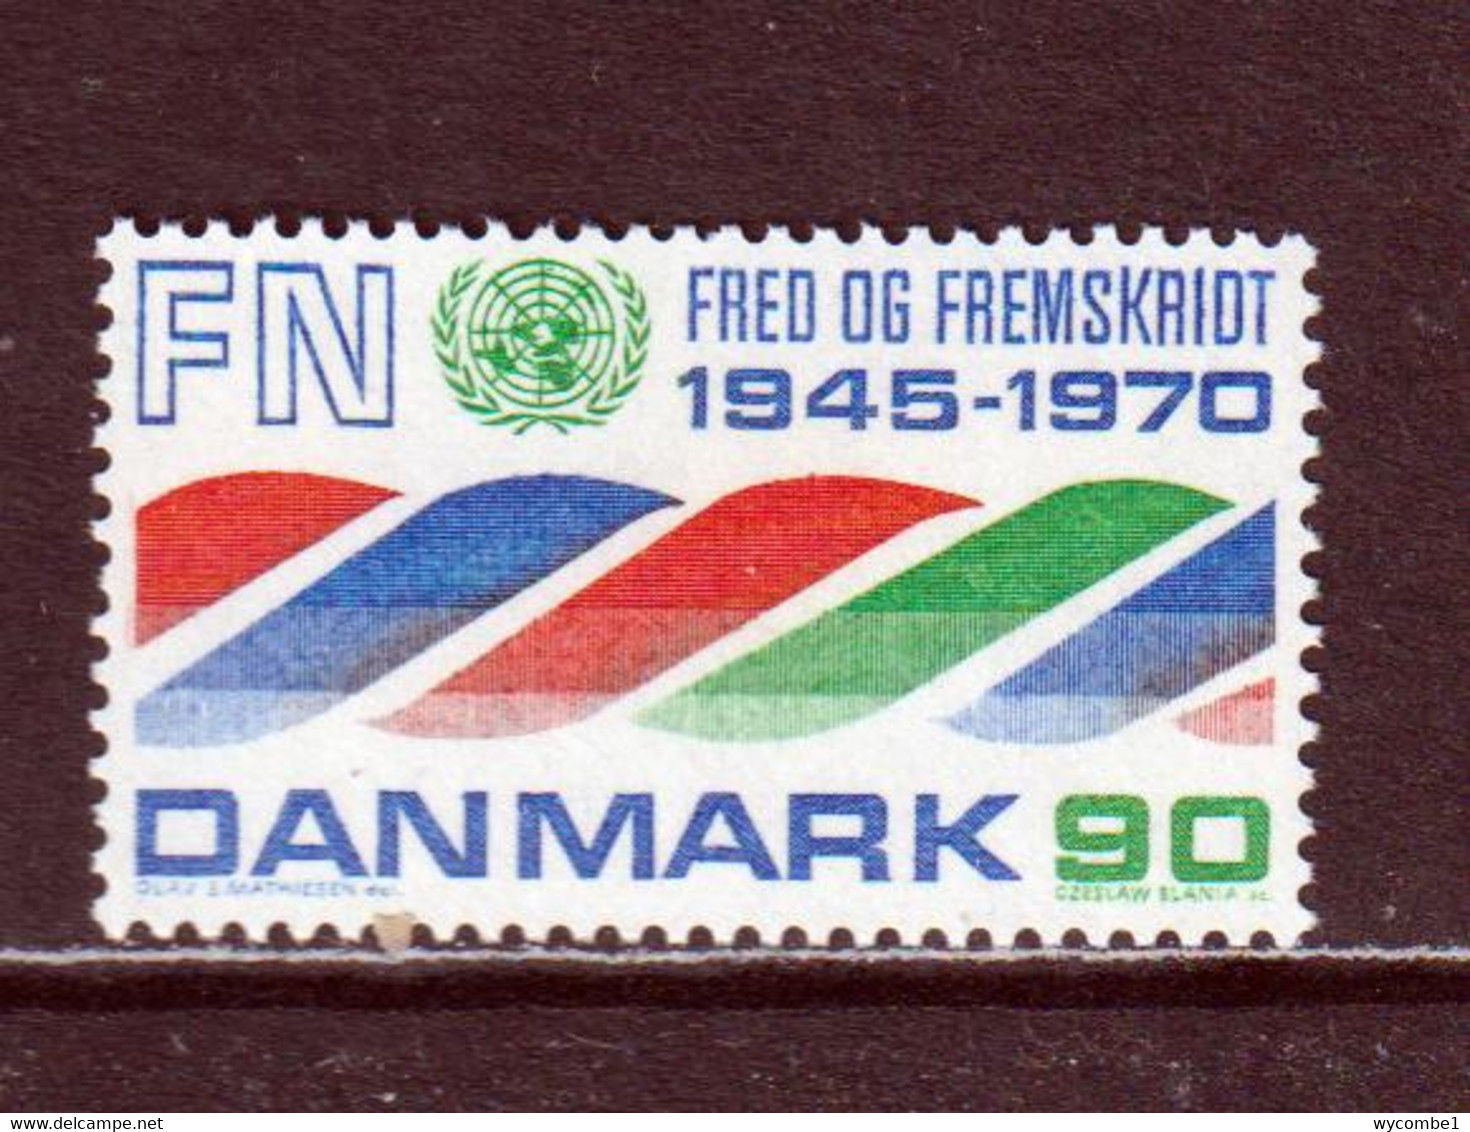 DENMARK - 1970 United Nations 90o Never Hinged Mint - Nuovi